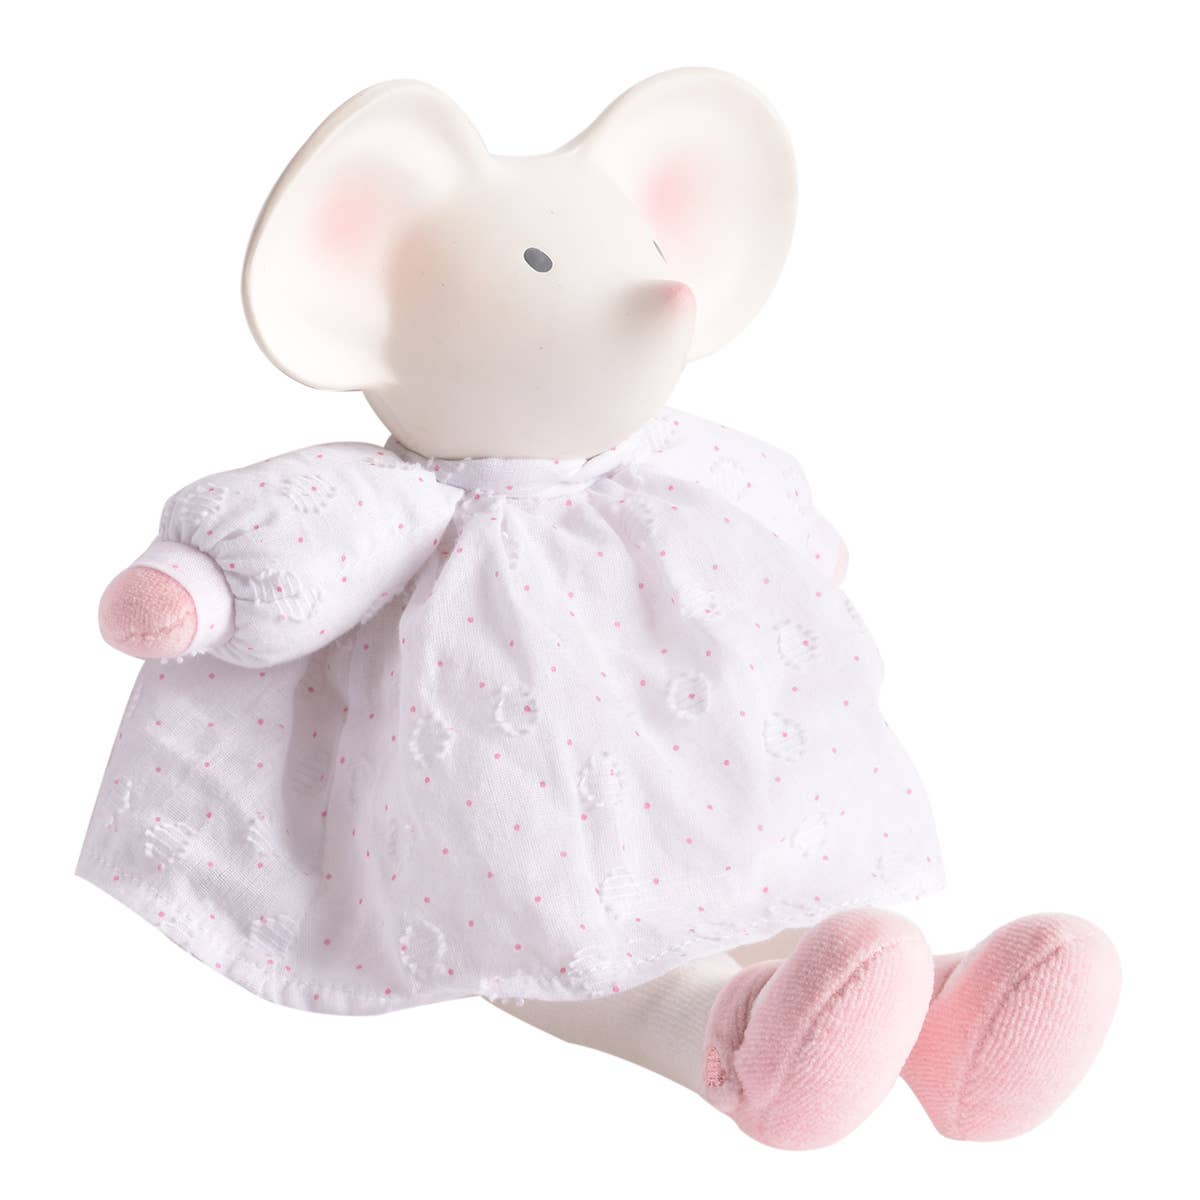 Tikiri Toys LLC - Meiya the Mouse Toy With Rubber Head in White Dress - Mumzie's Children